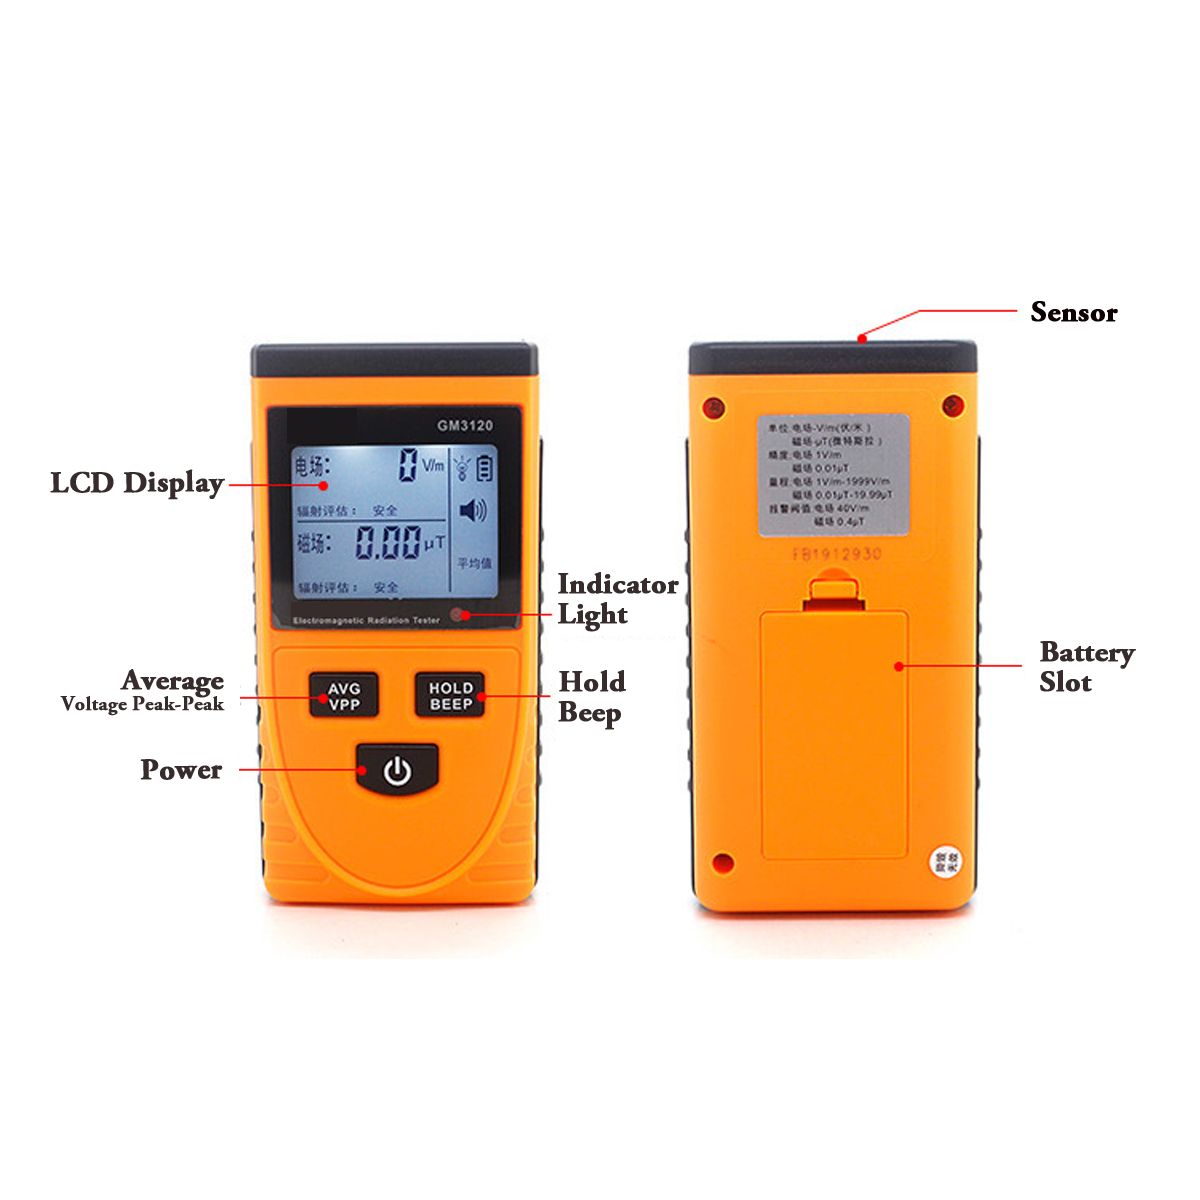 GM3120-Digital-Electromagnetic-Radiation-Detector-Meter-Dosimeter-Tester-Counter-1693908